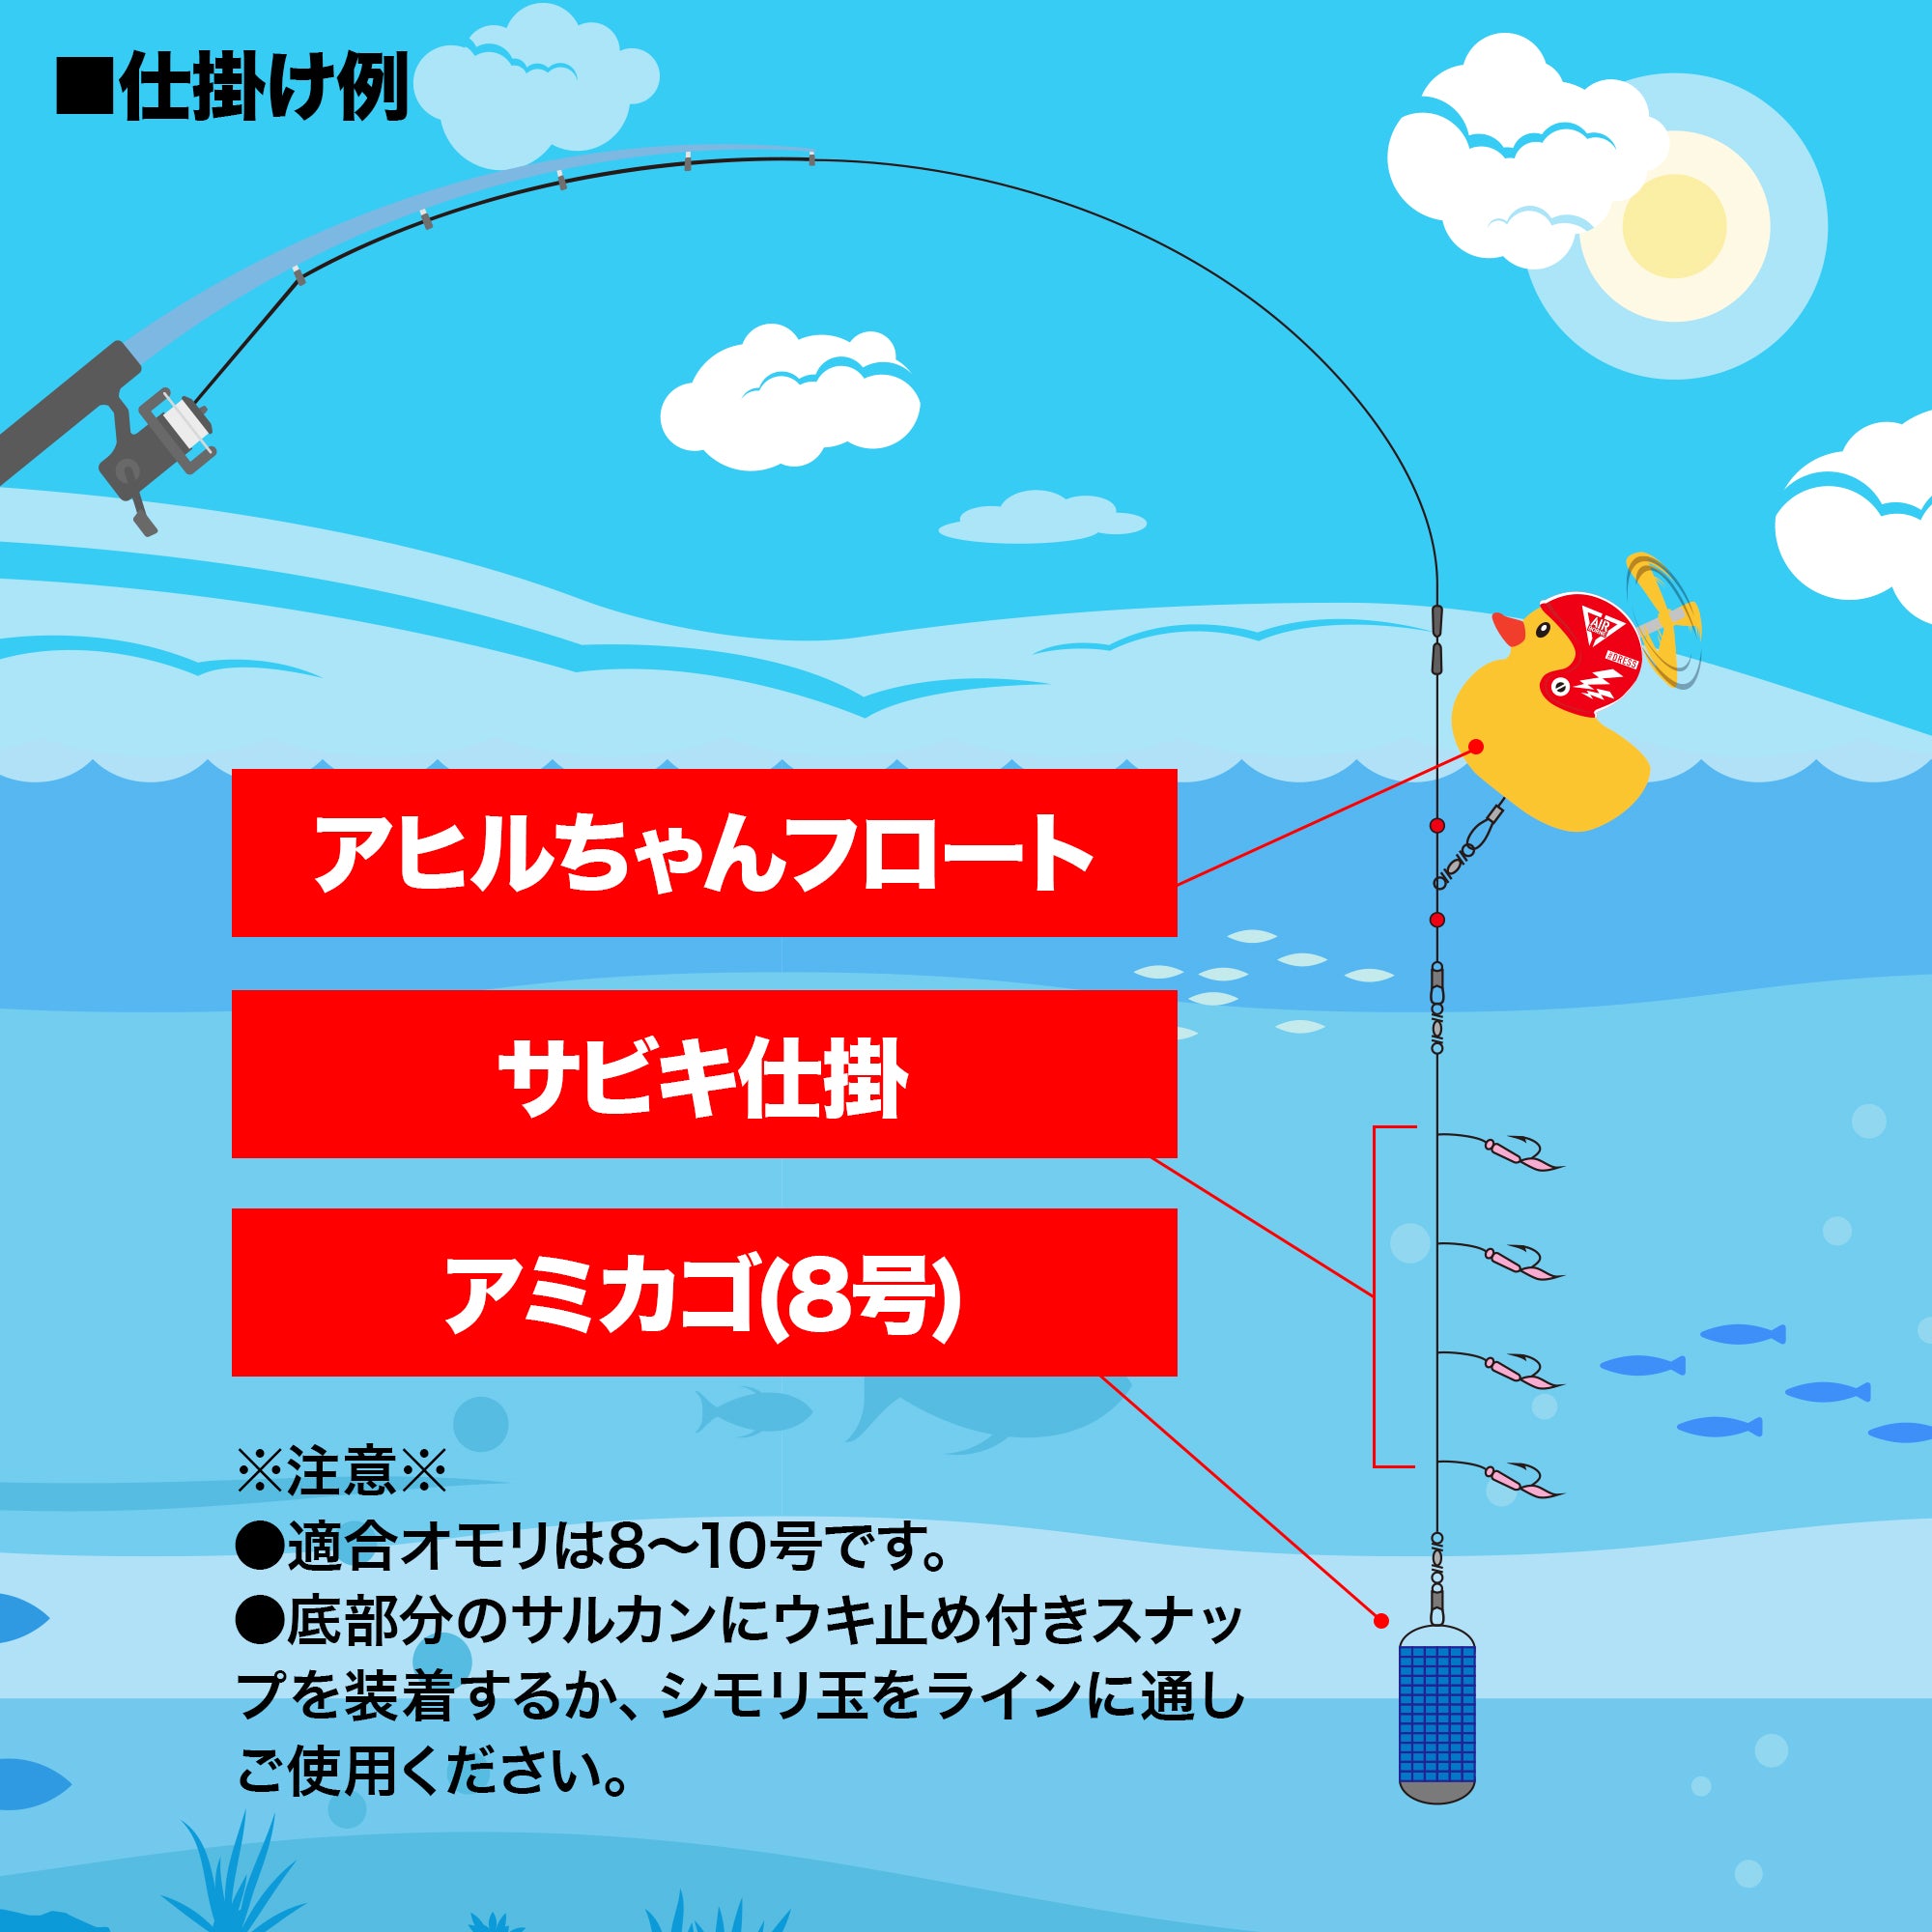 DRESS アヒルちゃんフロート ジェットライダー(釣り用ウキ)【5月中旬発売予定！予約受付中！】